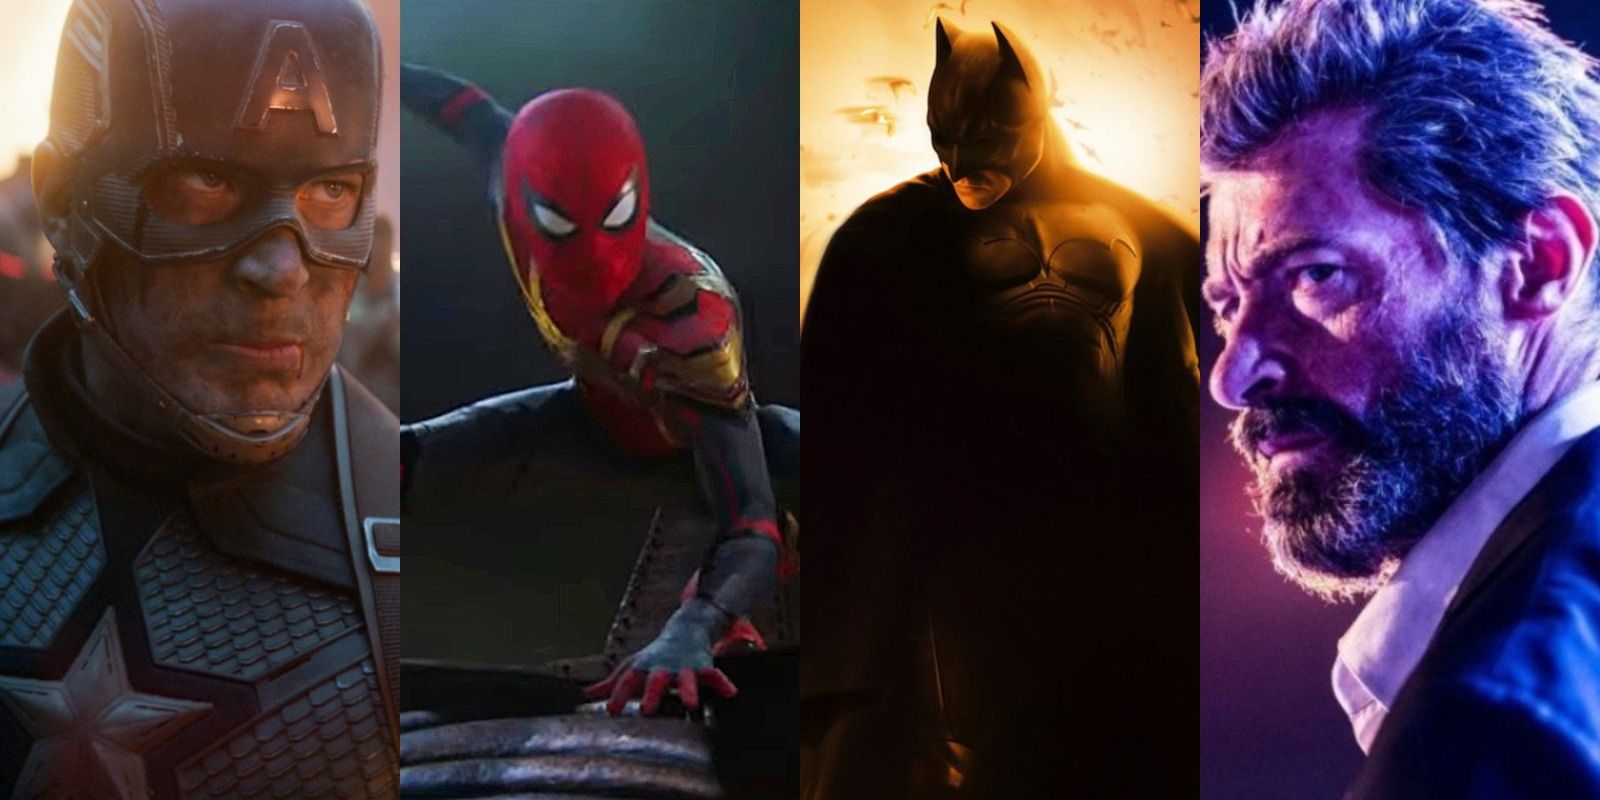 10 Best Superhero Movies Of All Time, According To IMDb